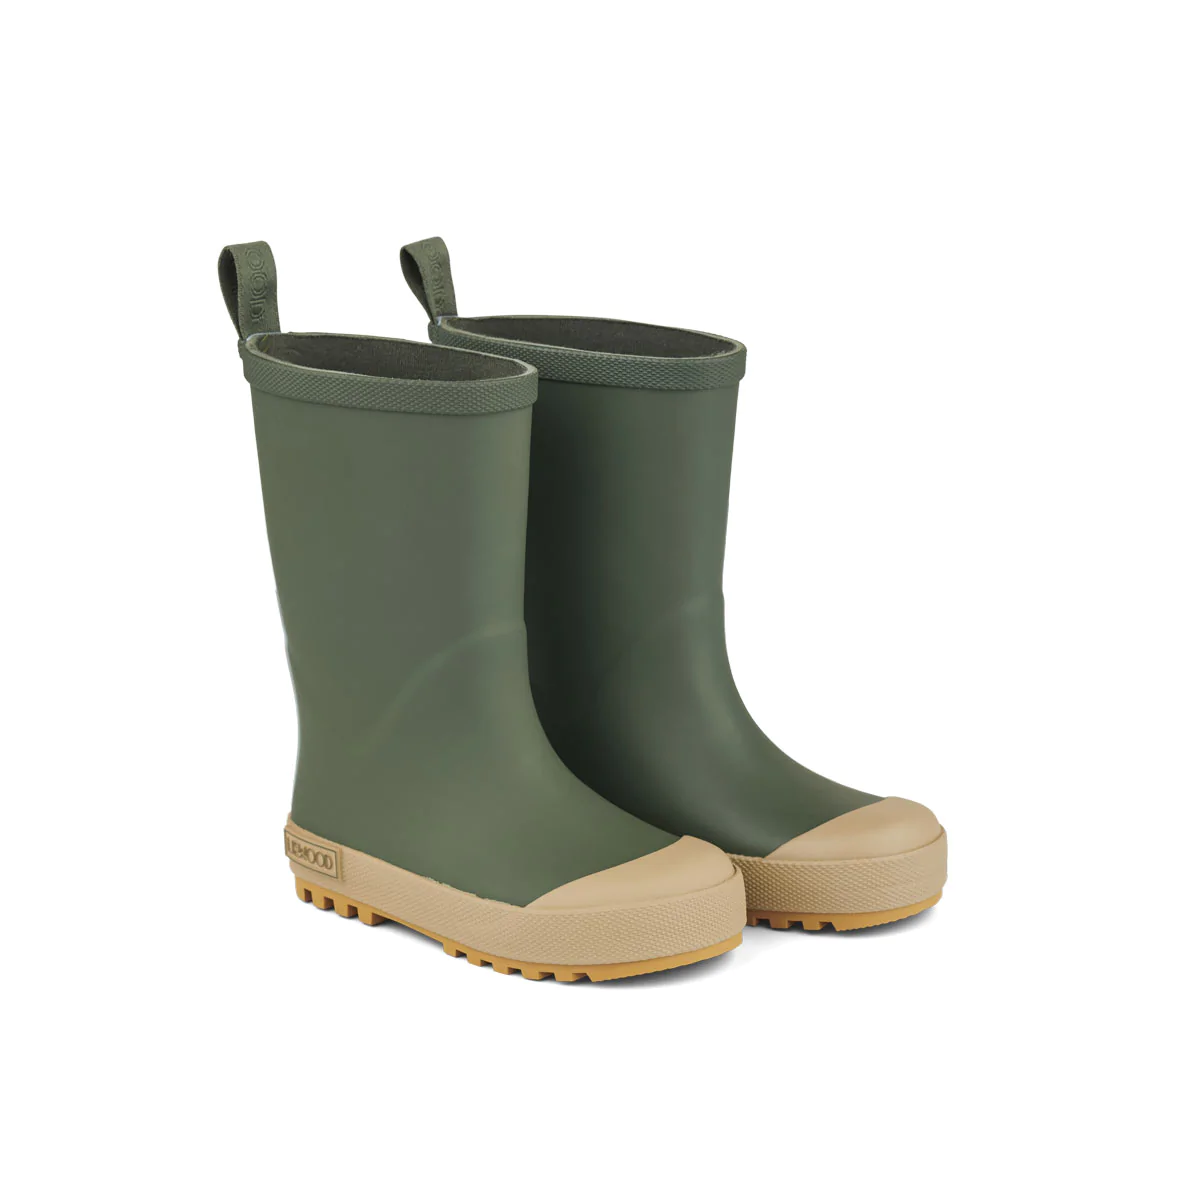 River Rain Boot Boots LW15111 9311 Hunter green multi mix